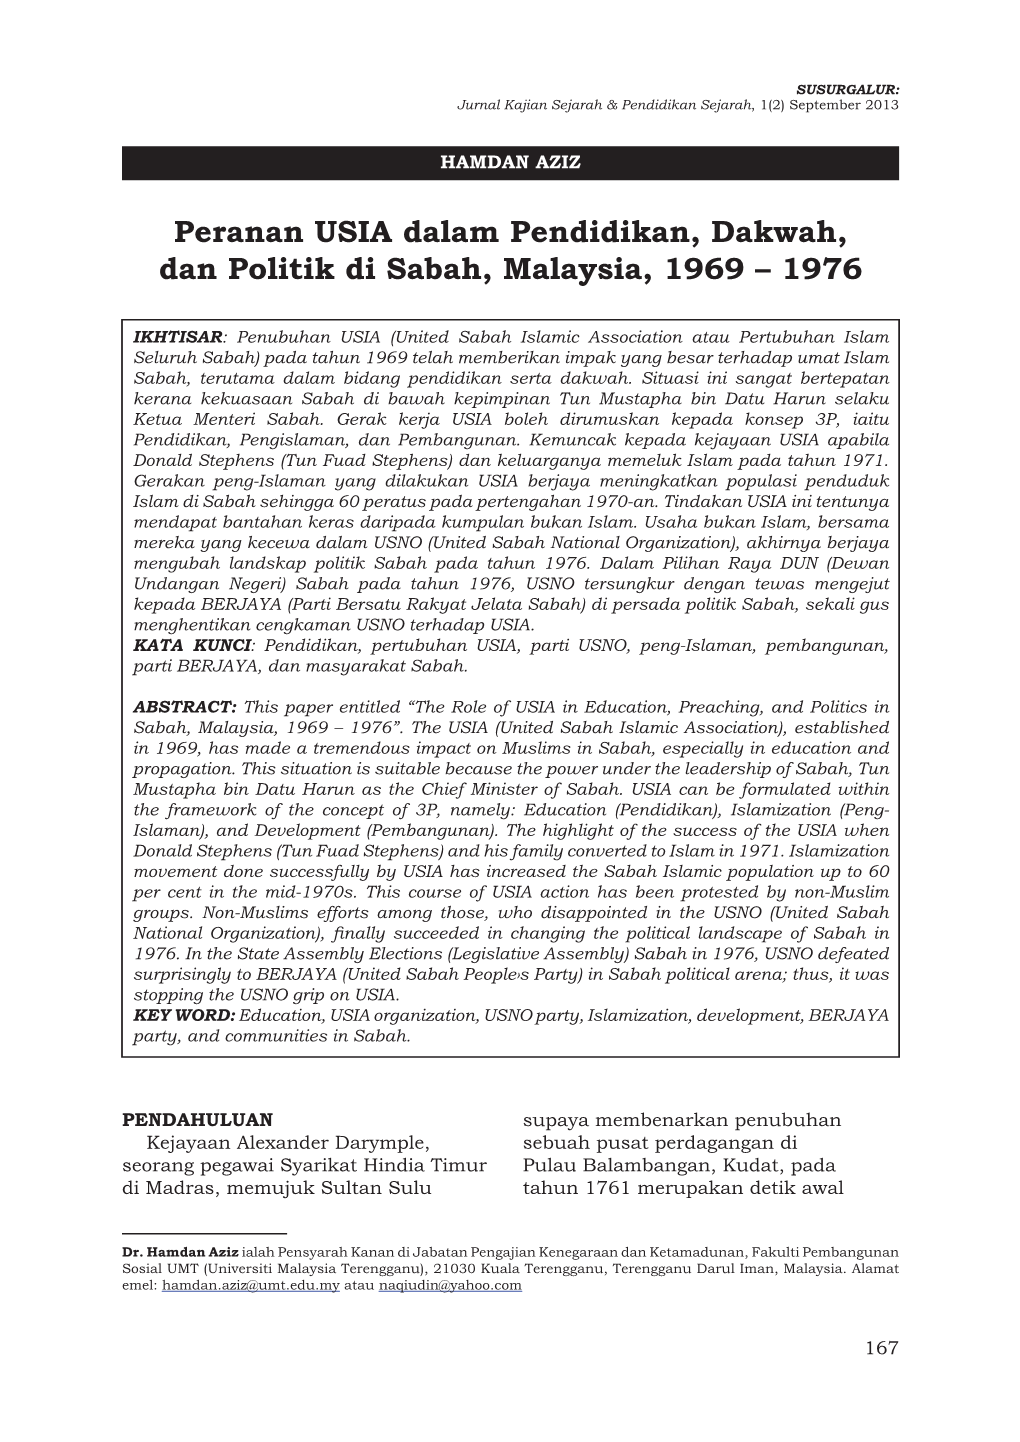 Peranan USIA Dalam Pendidikan, Dakwah, Dan Politik Di Sabah, Malaysia, 1969 – 1976